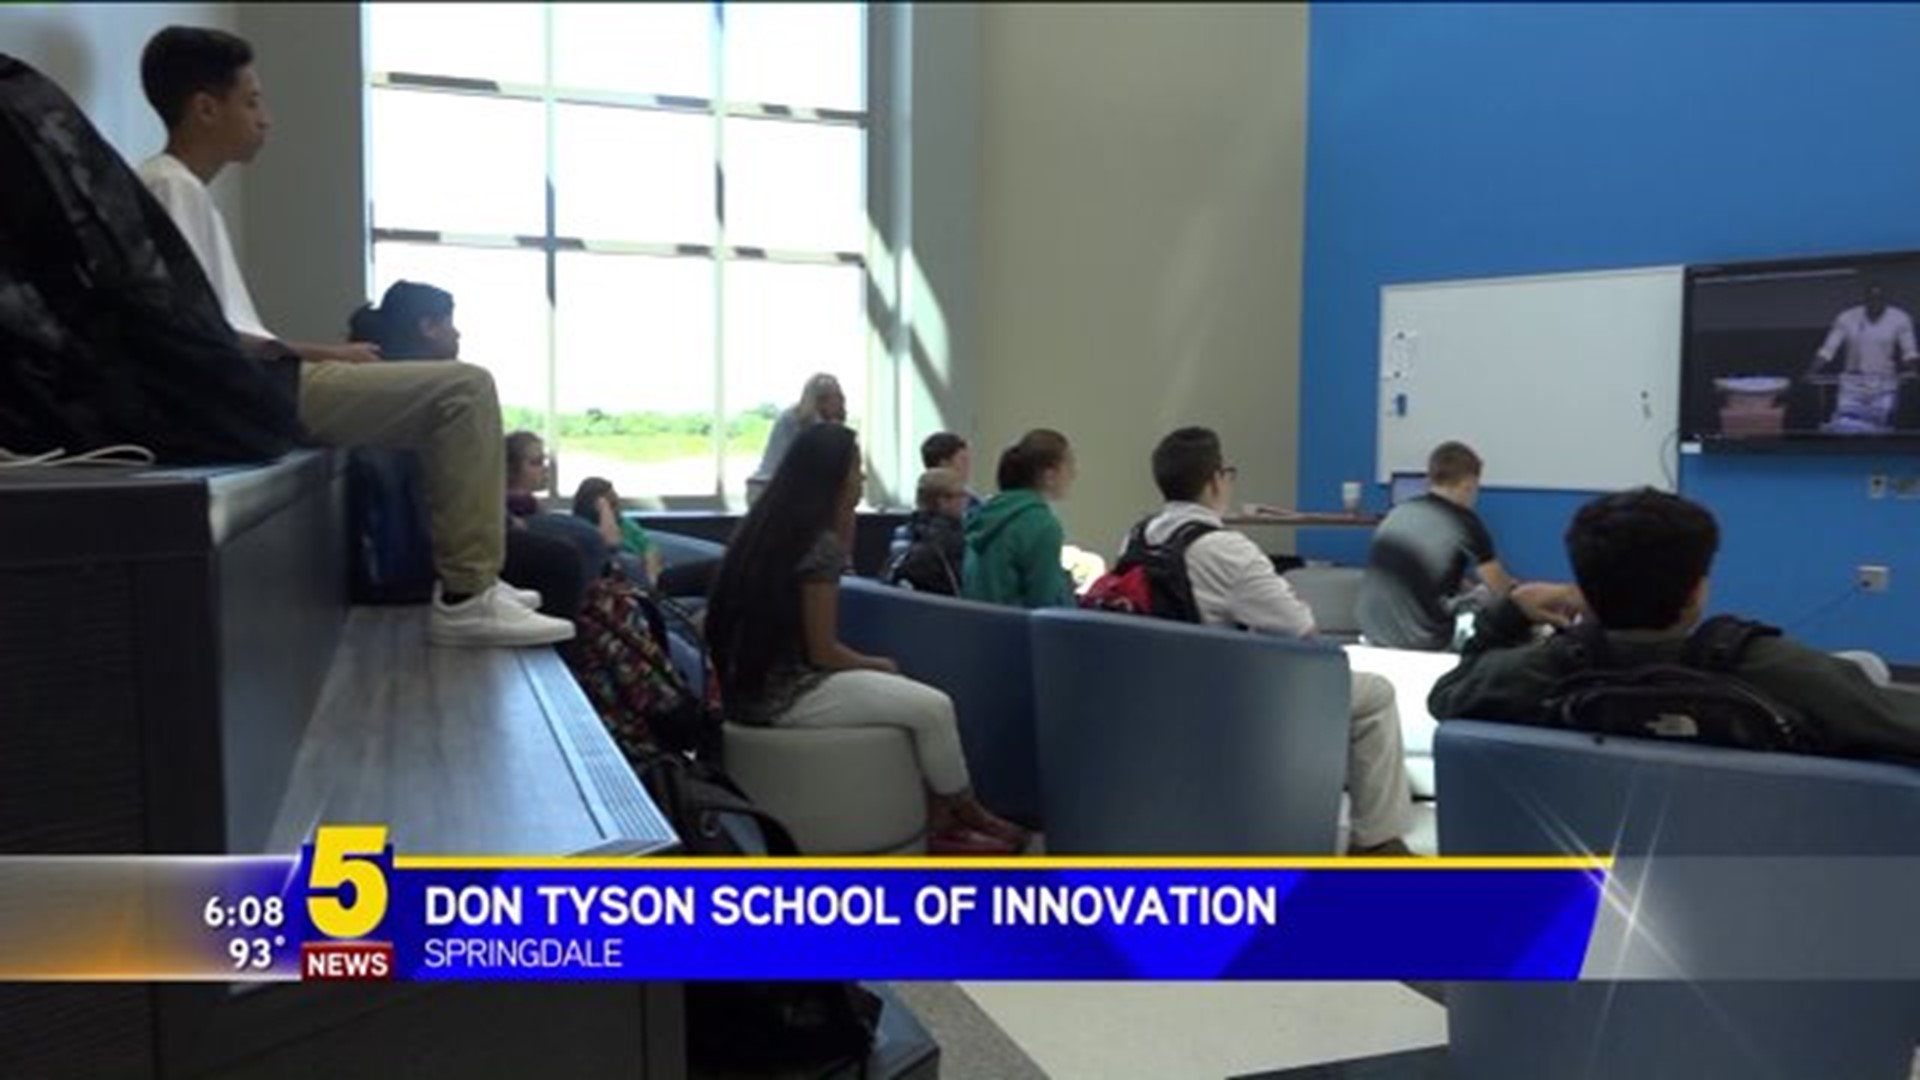 Don Tyson School of Innovation